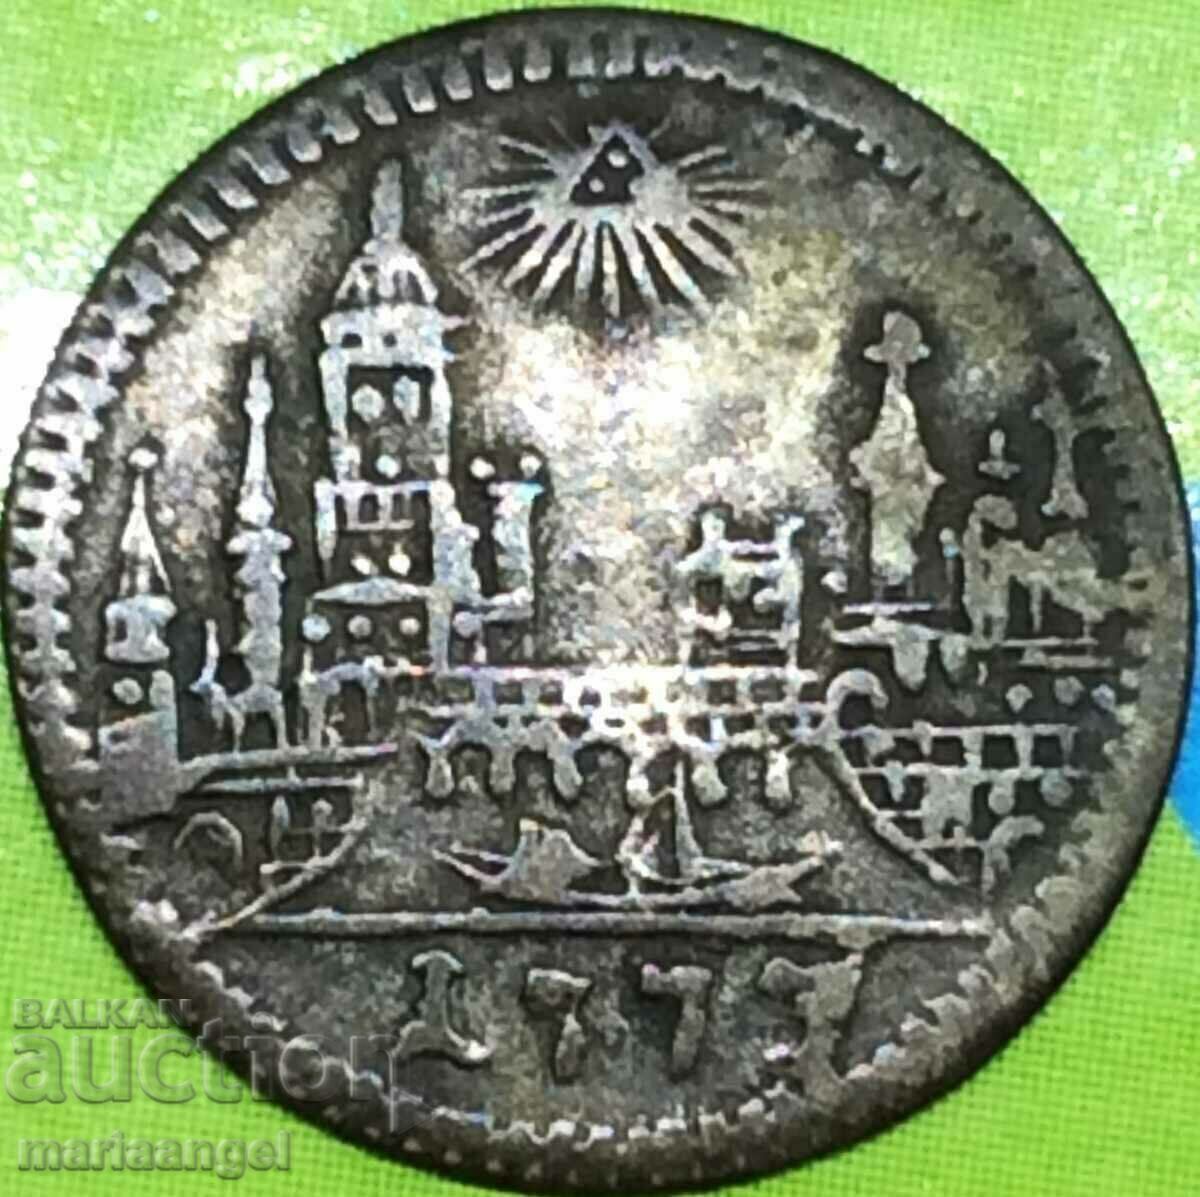 Frankfurt 1 Kreuzer 1773 Germany panorama silver